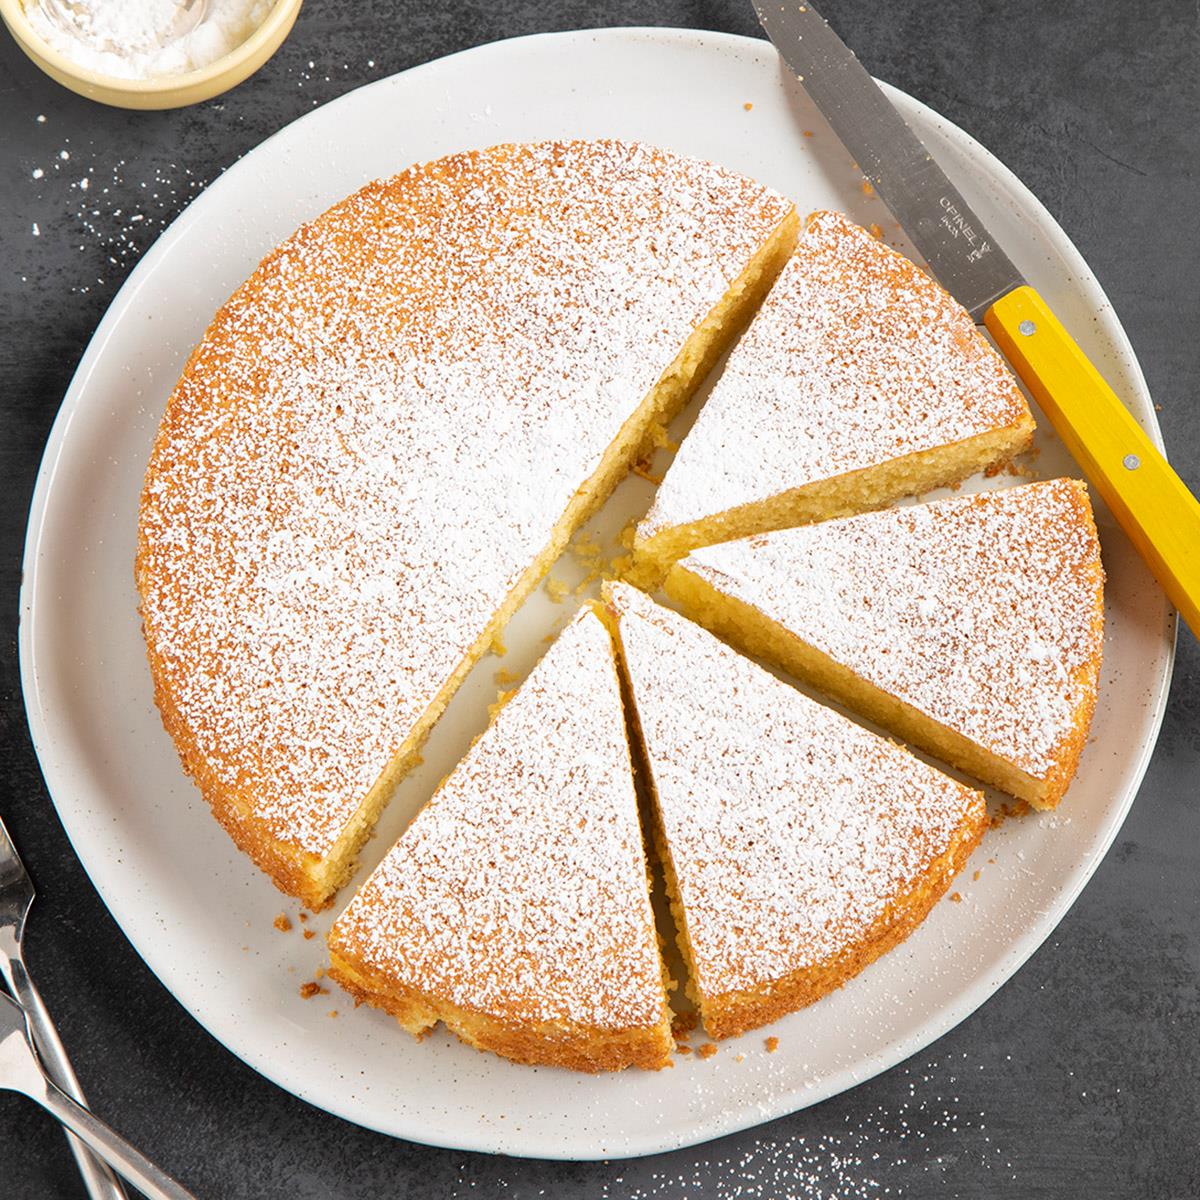 Lemon Olive Oil Cake Recipe: How to Make It